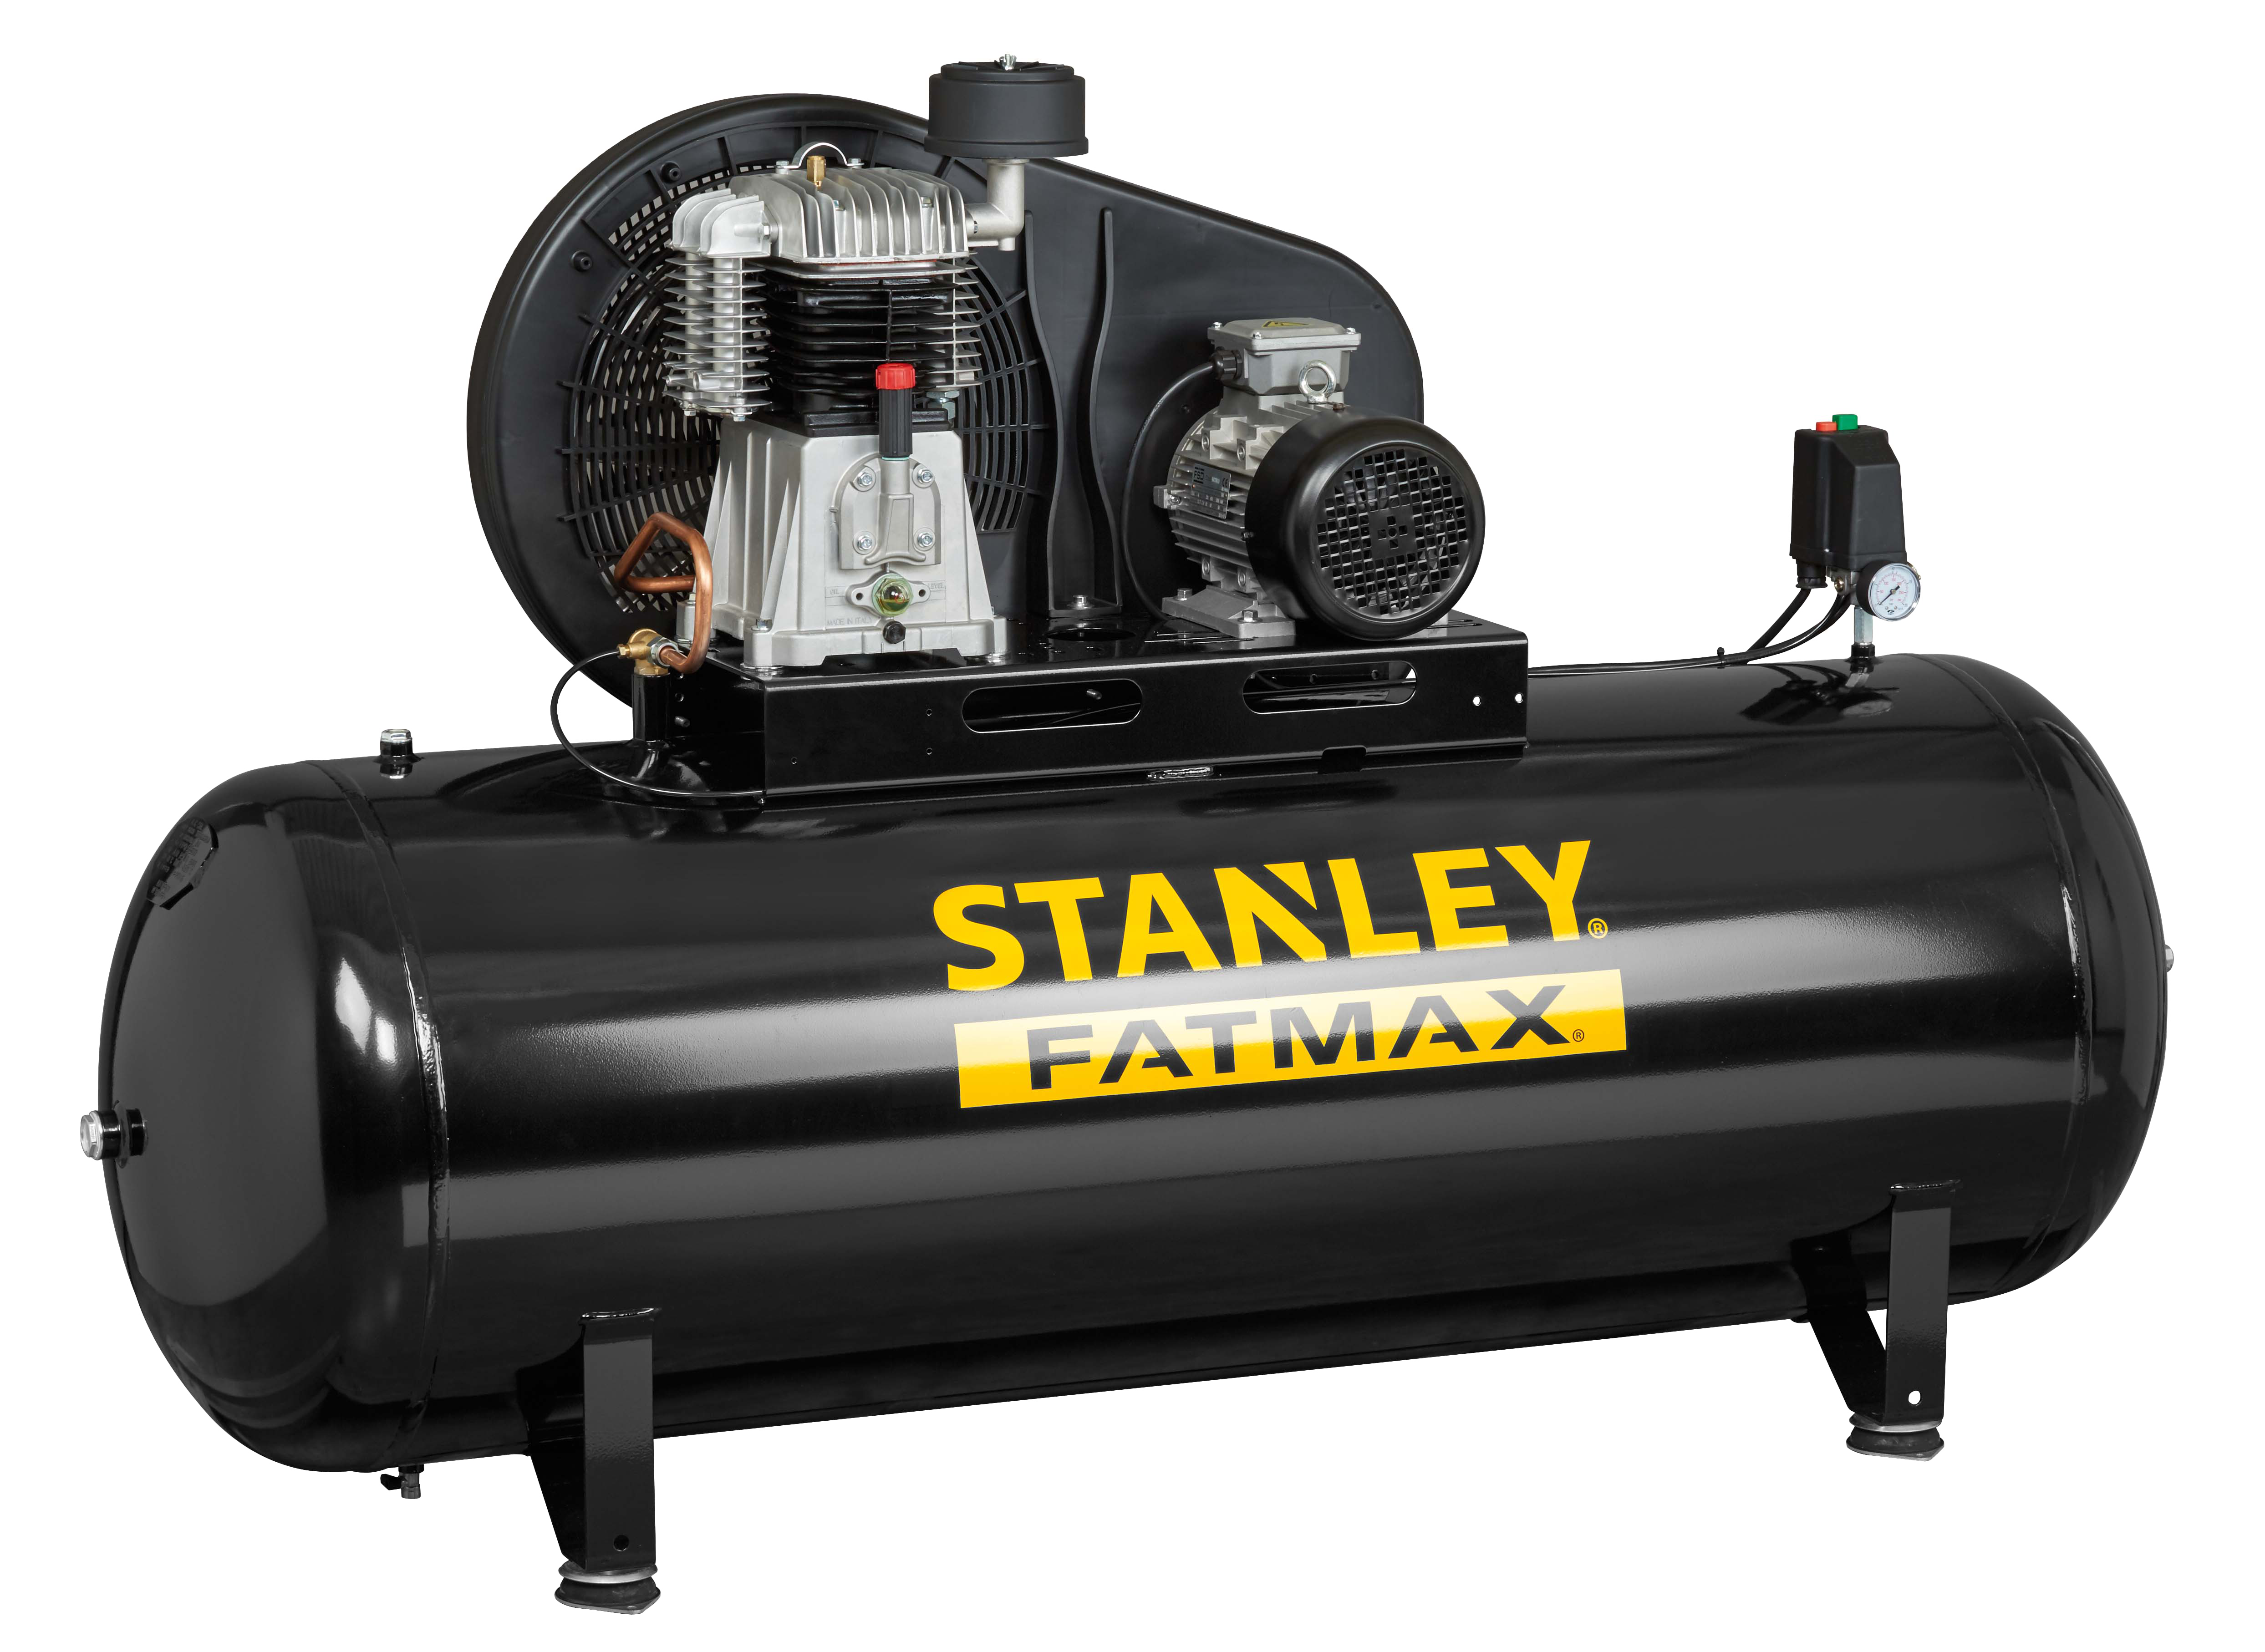 Compresor stanley fatmax ba 851/11/500 f stanley fatmax